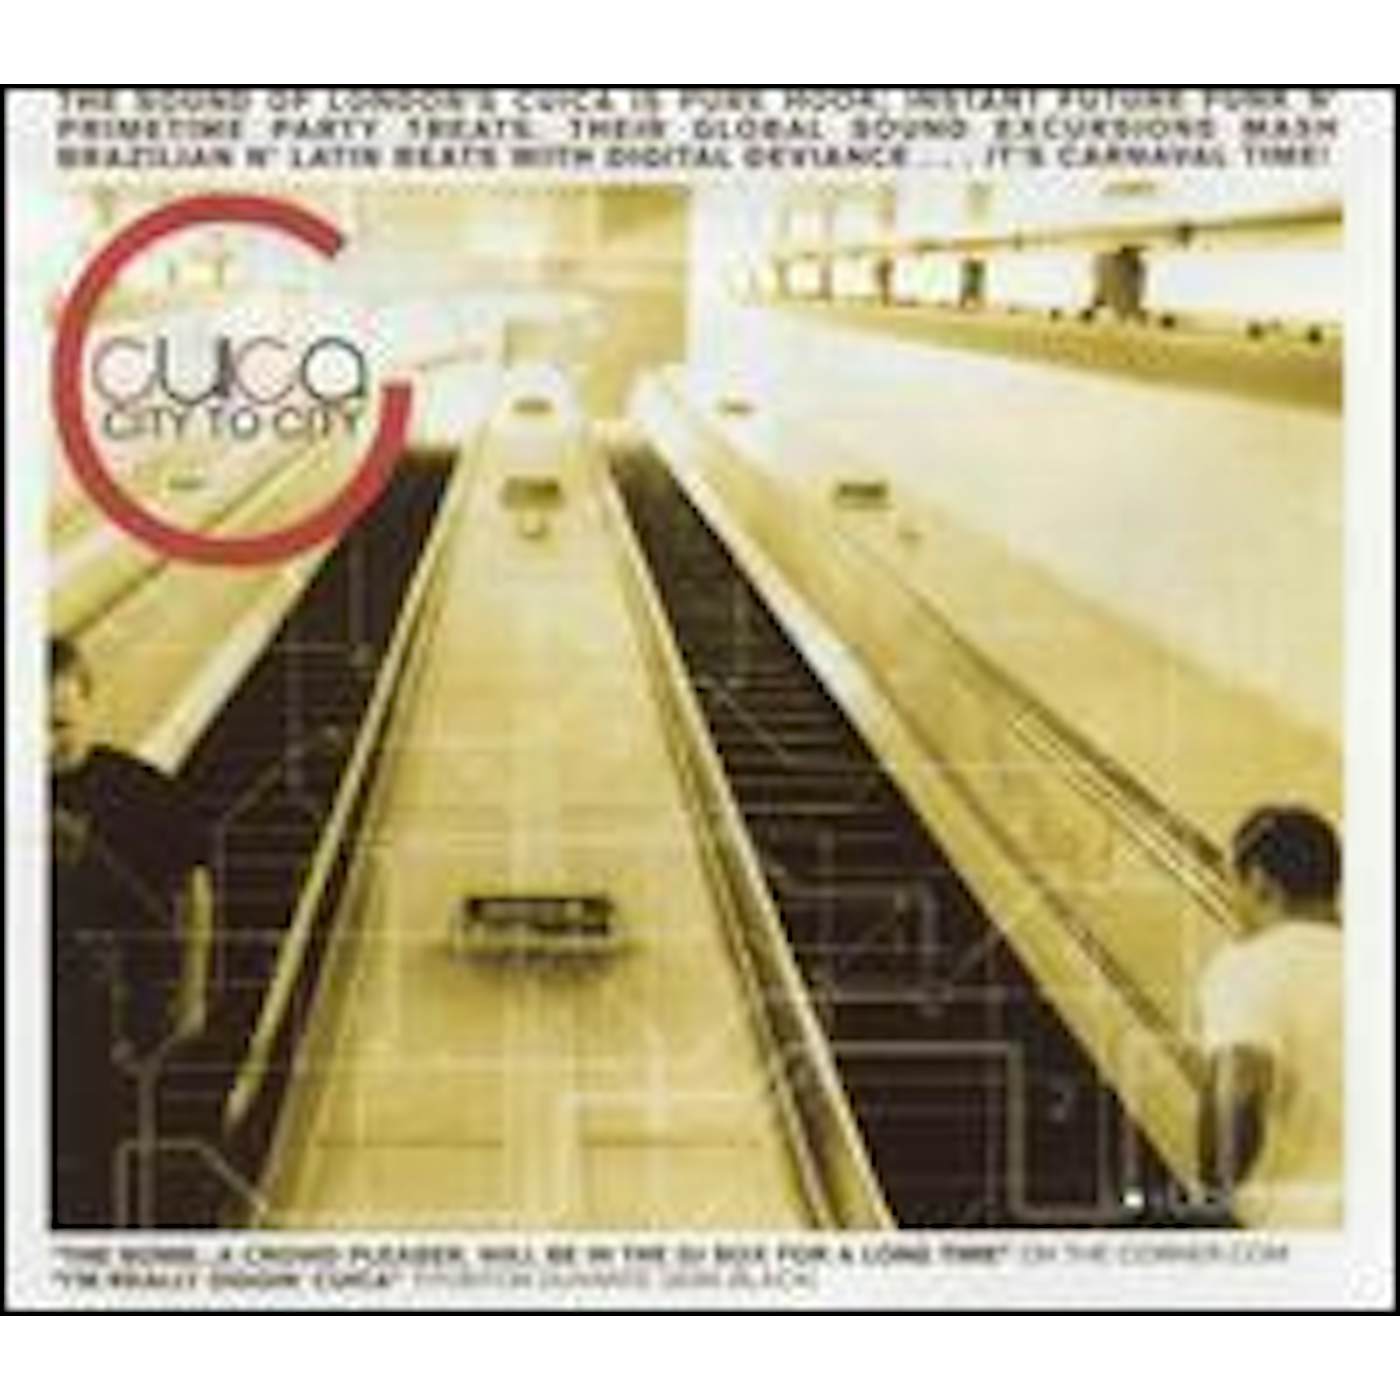 Cuica City To City Vinyl Record